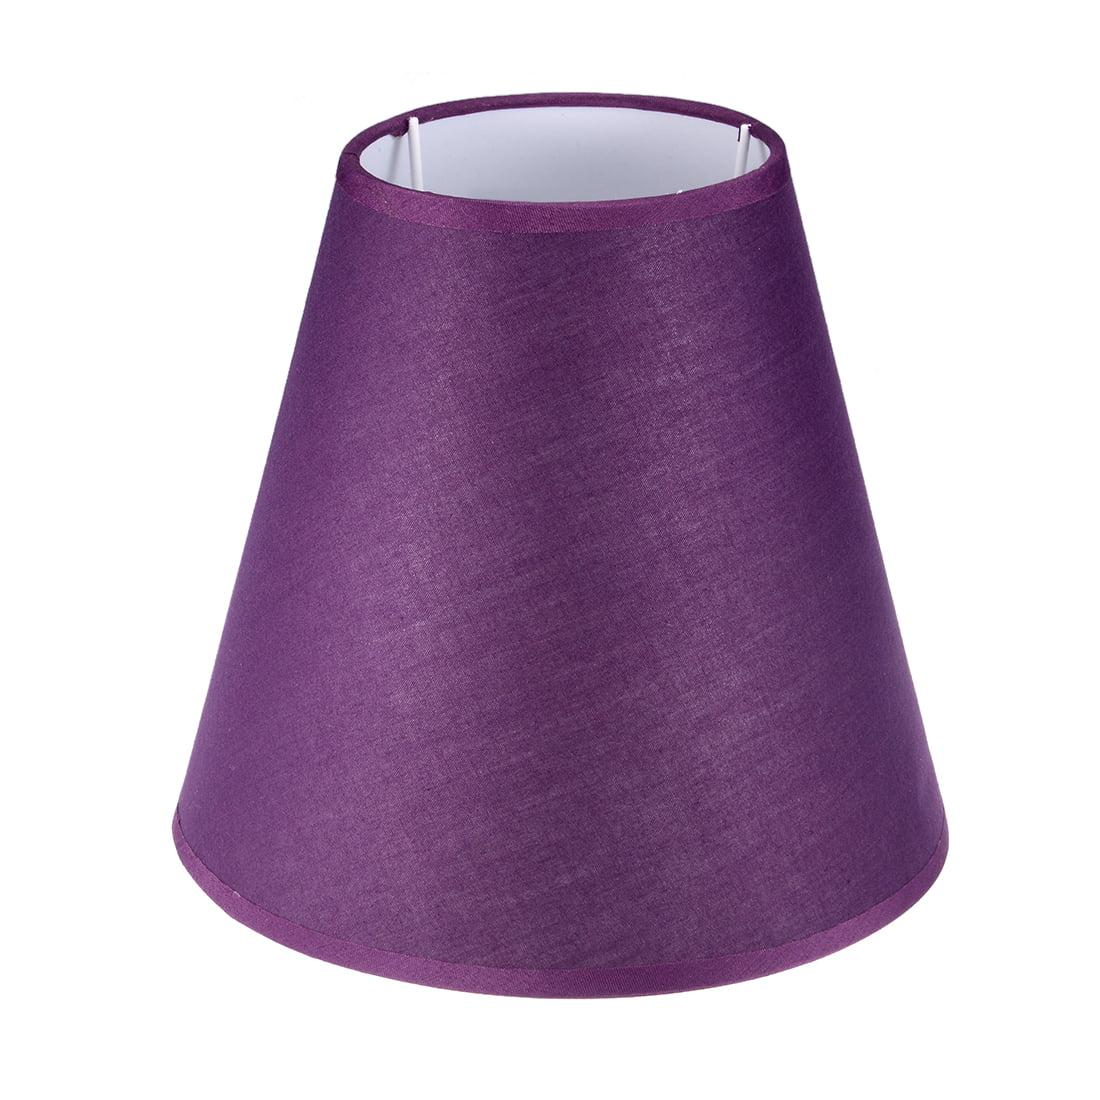 purple lamp shade b&m